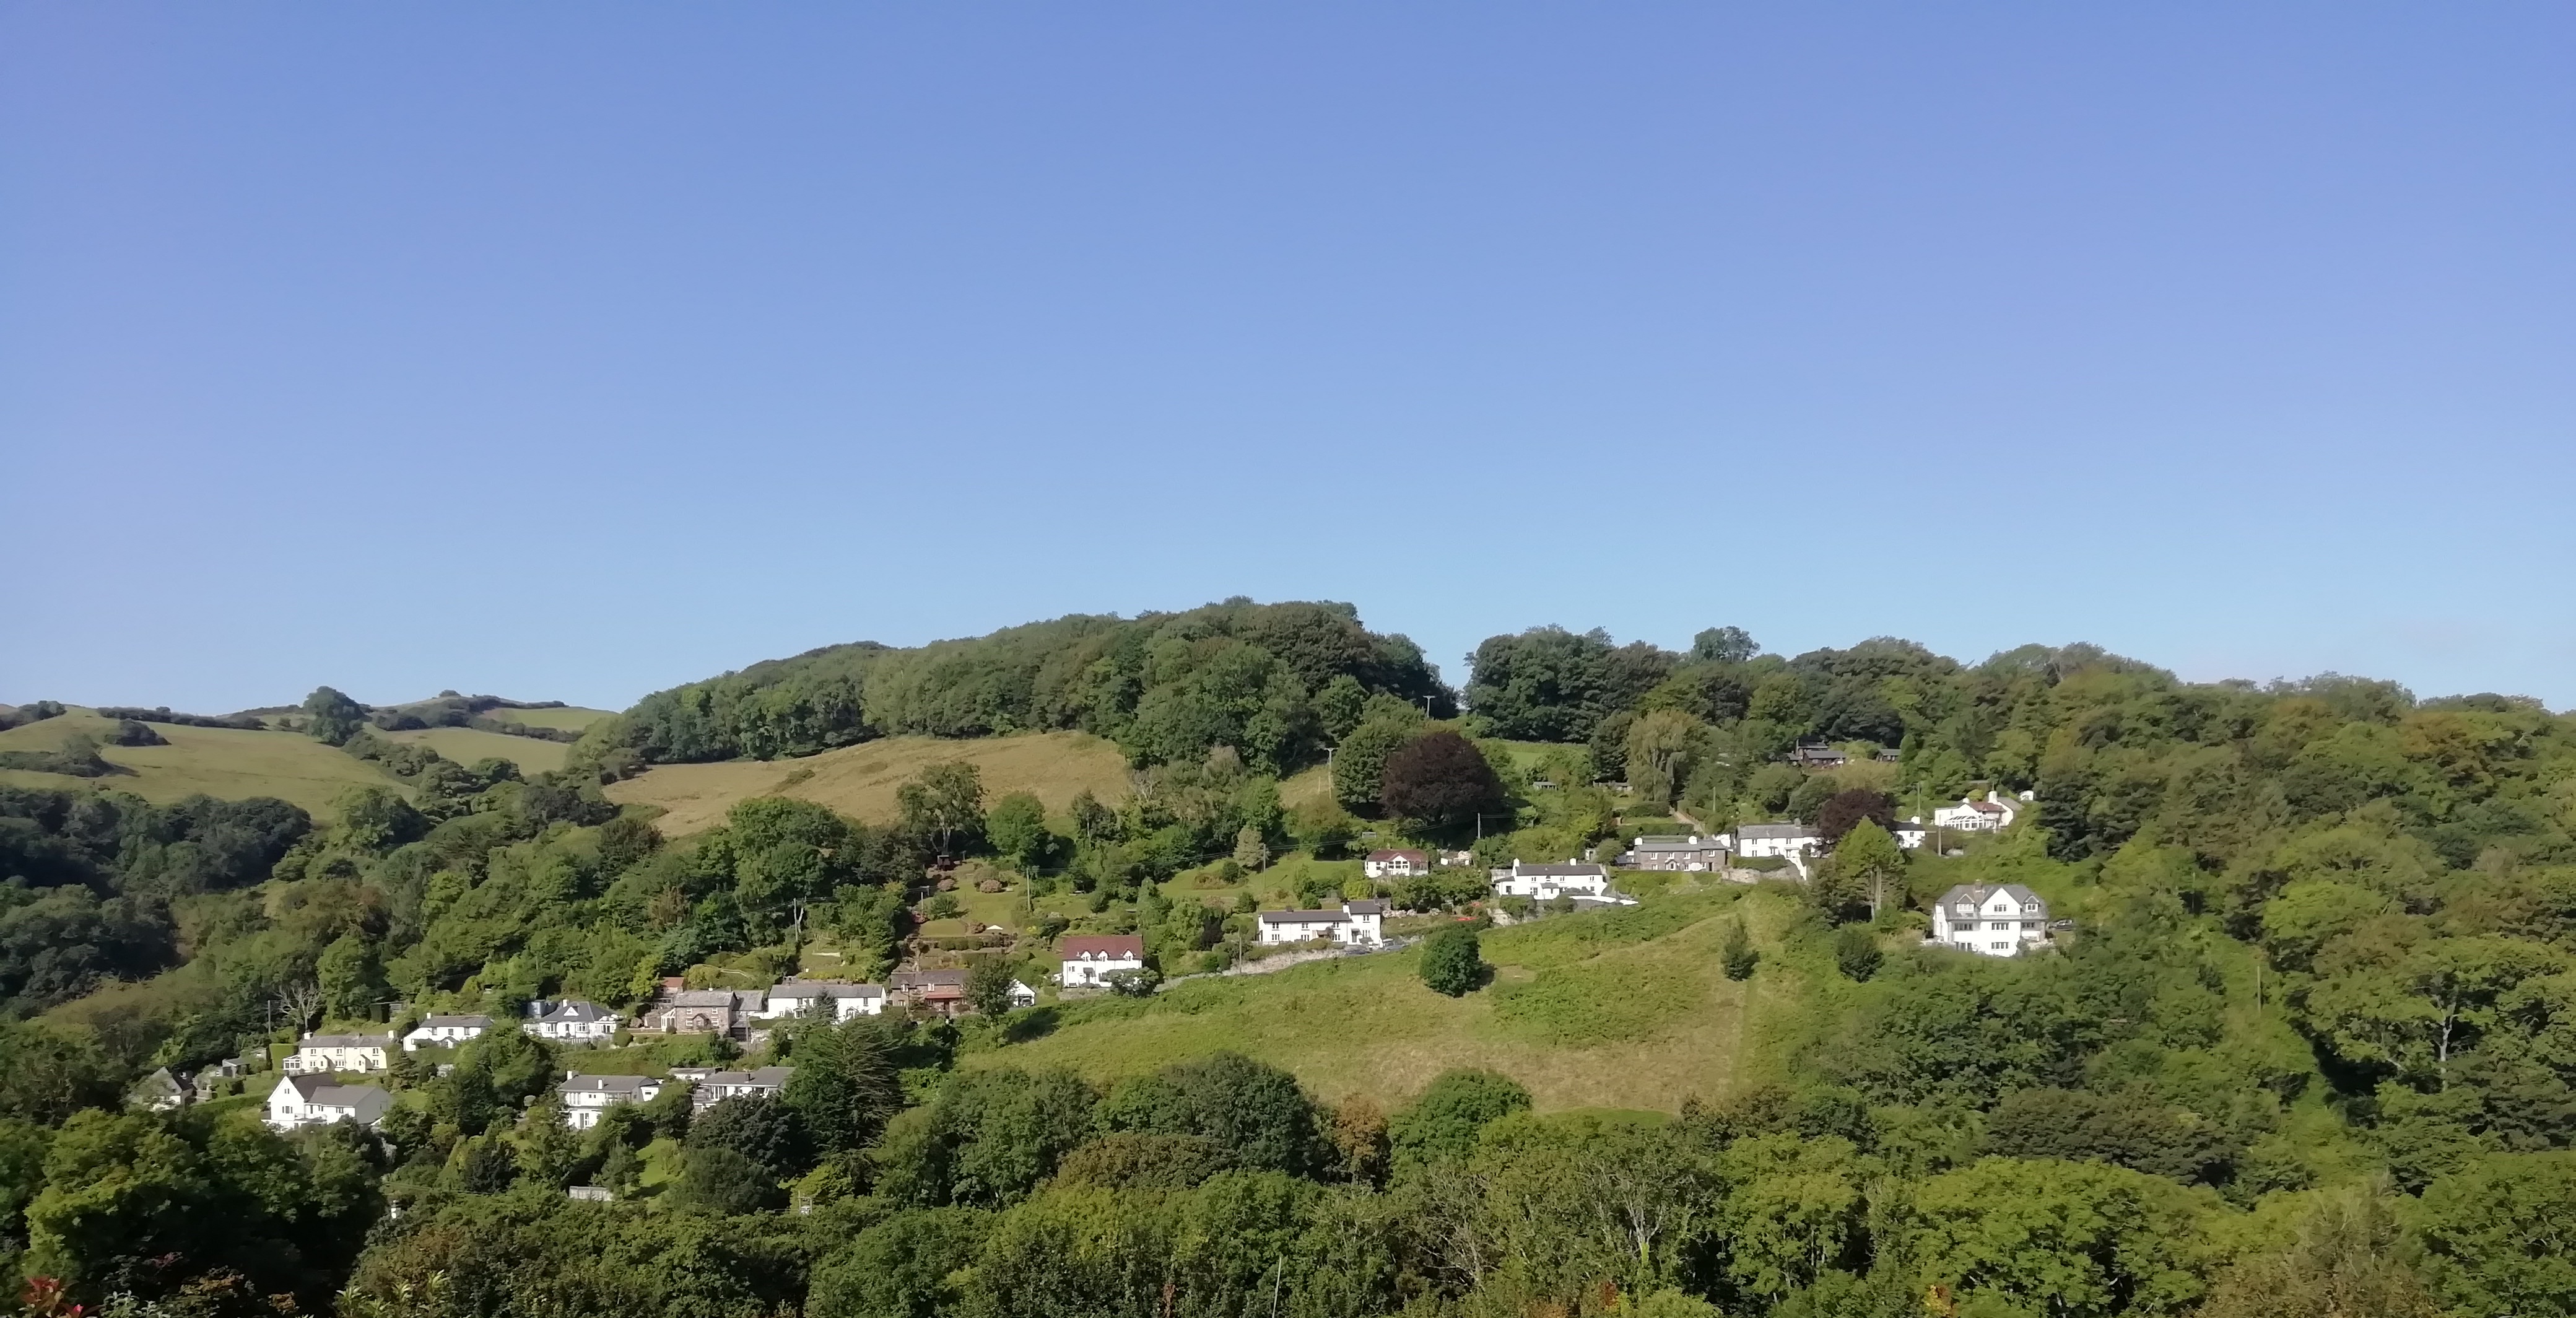 View of Haggington hill taken from Birdswell Lane.